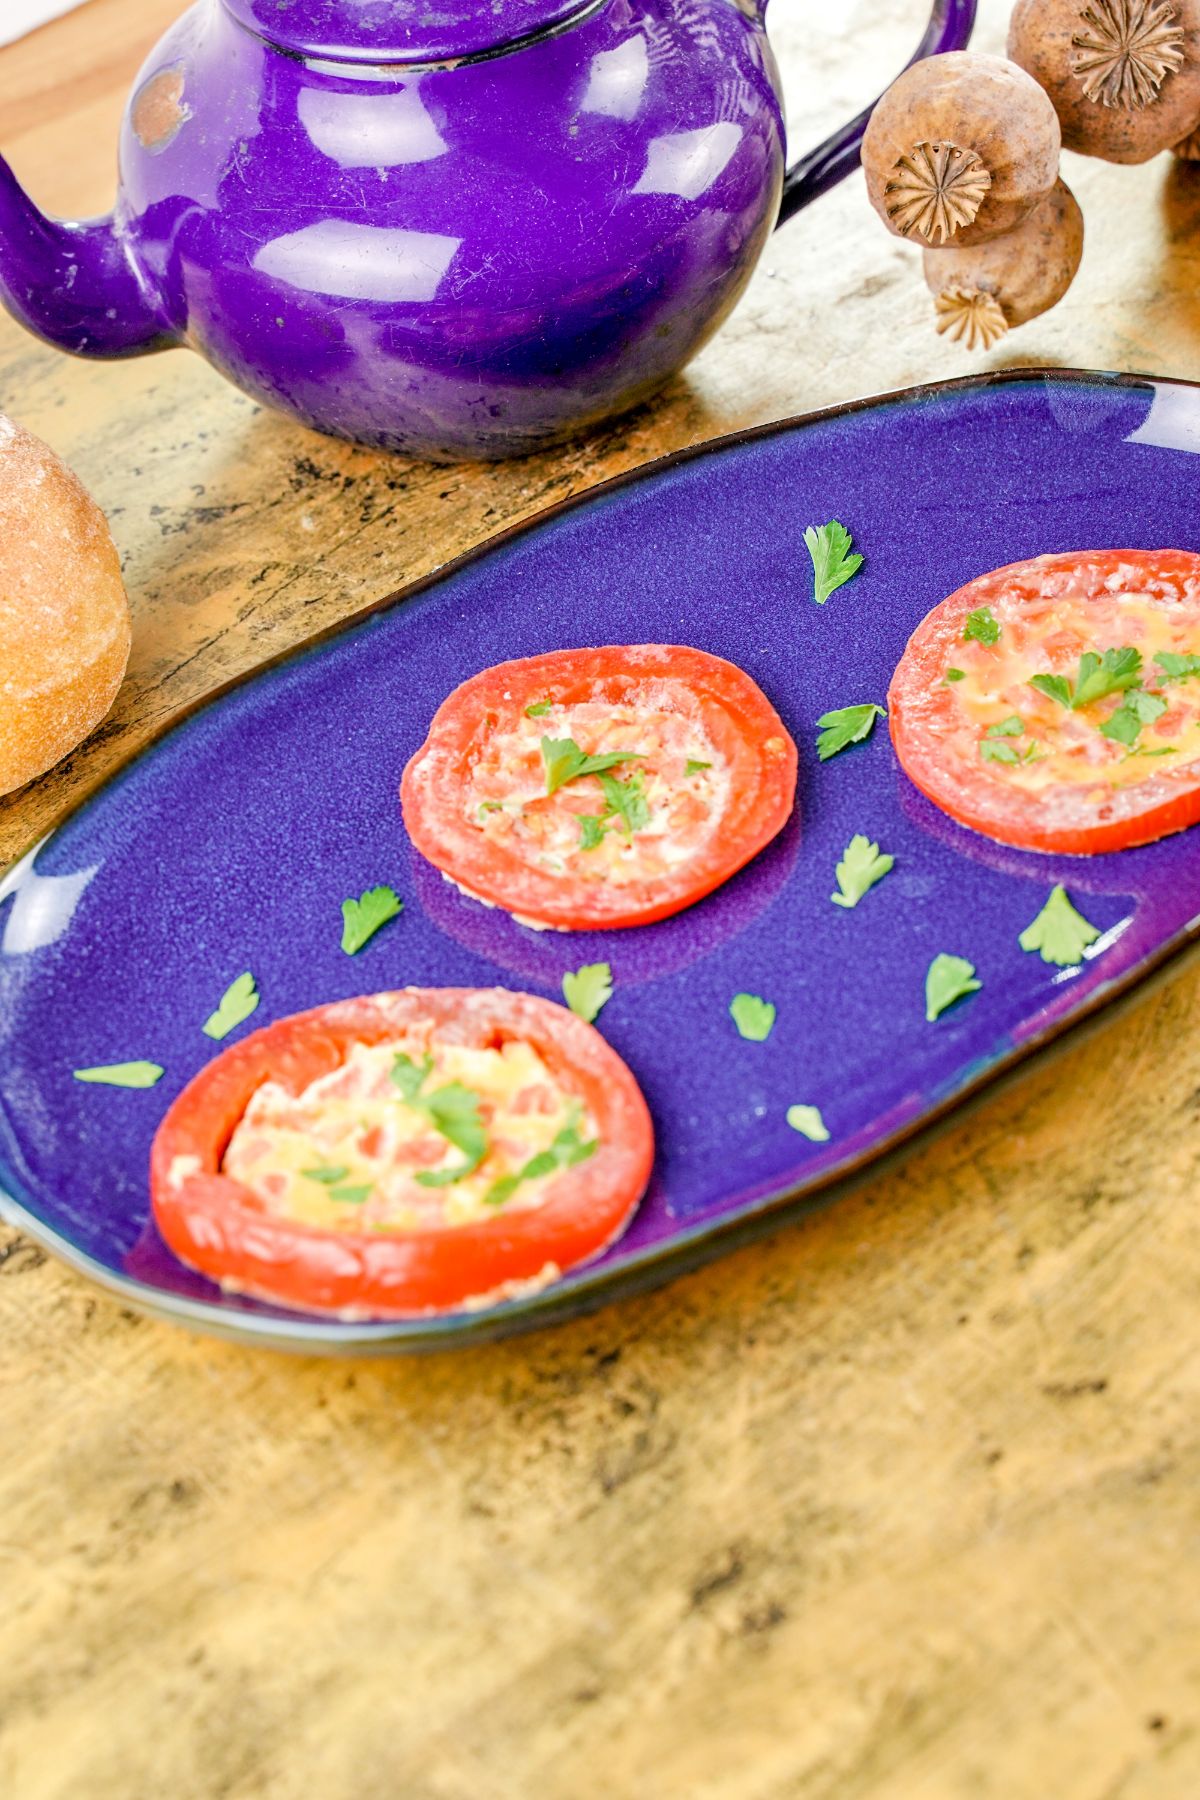 tomato egg rings on purple oval plate sitting on wood by purple tea kettle